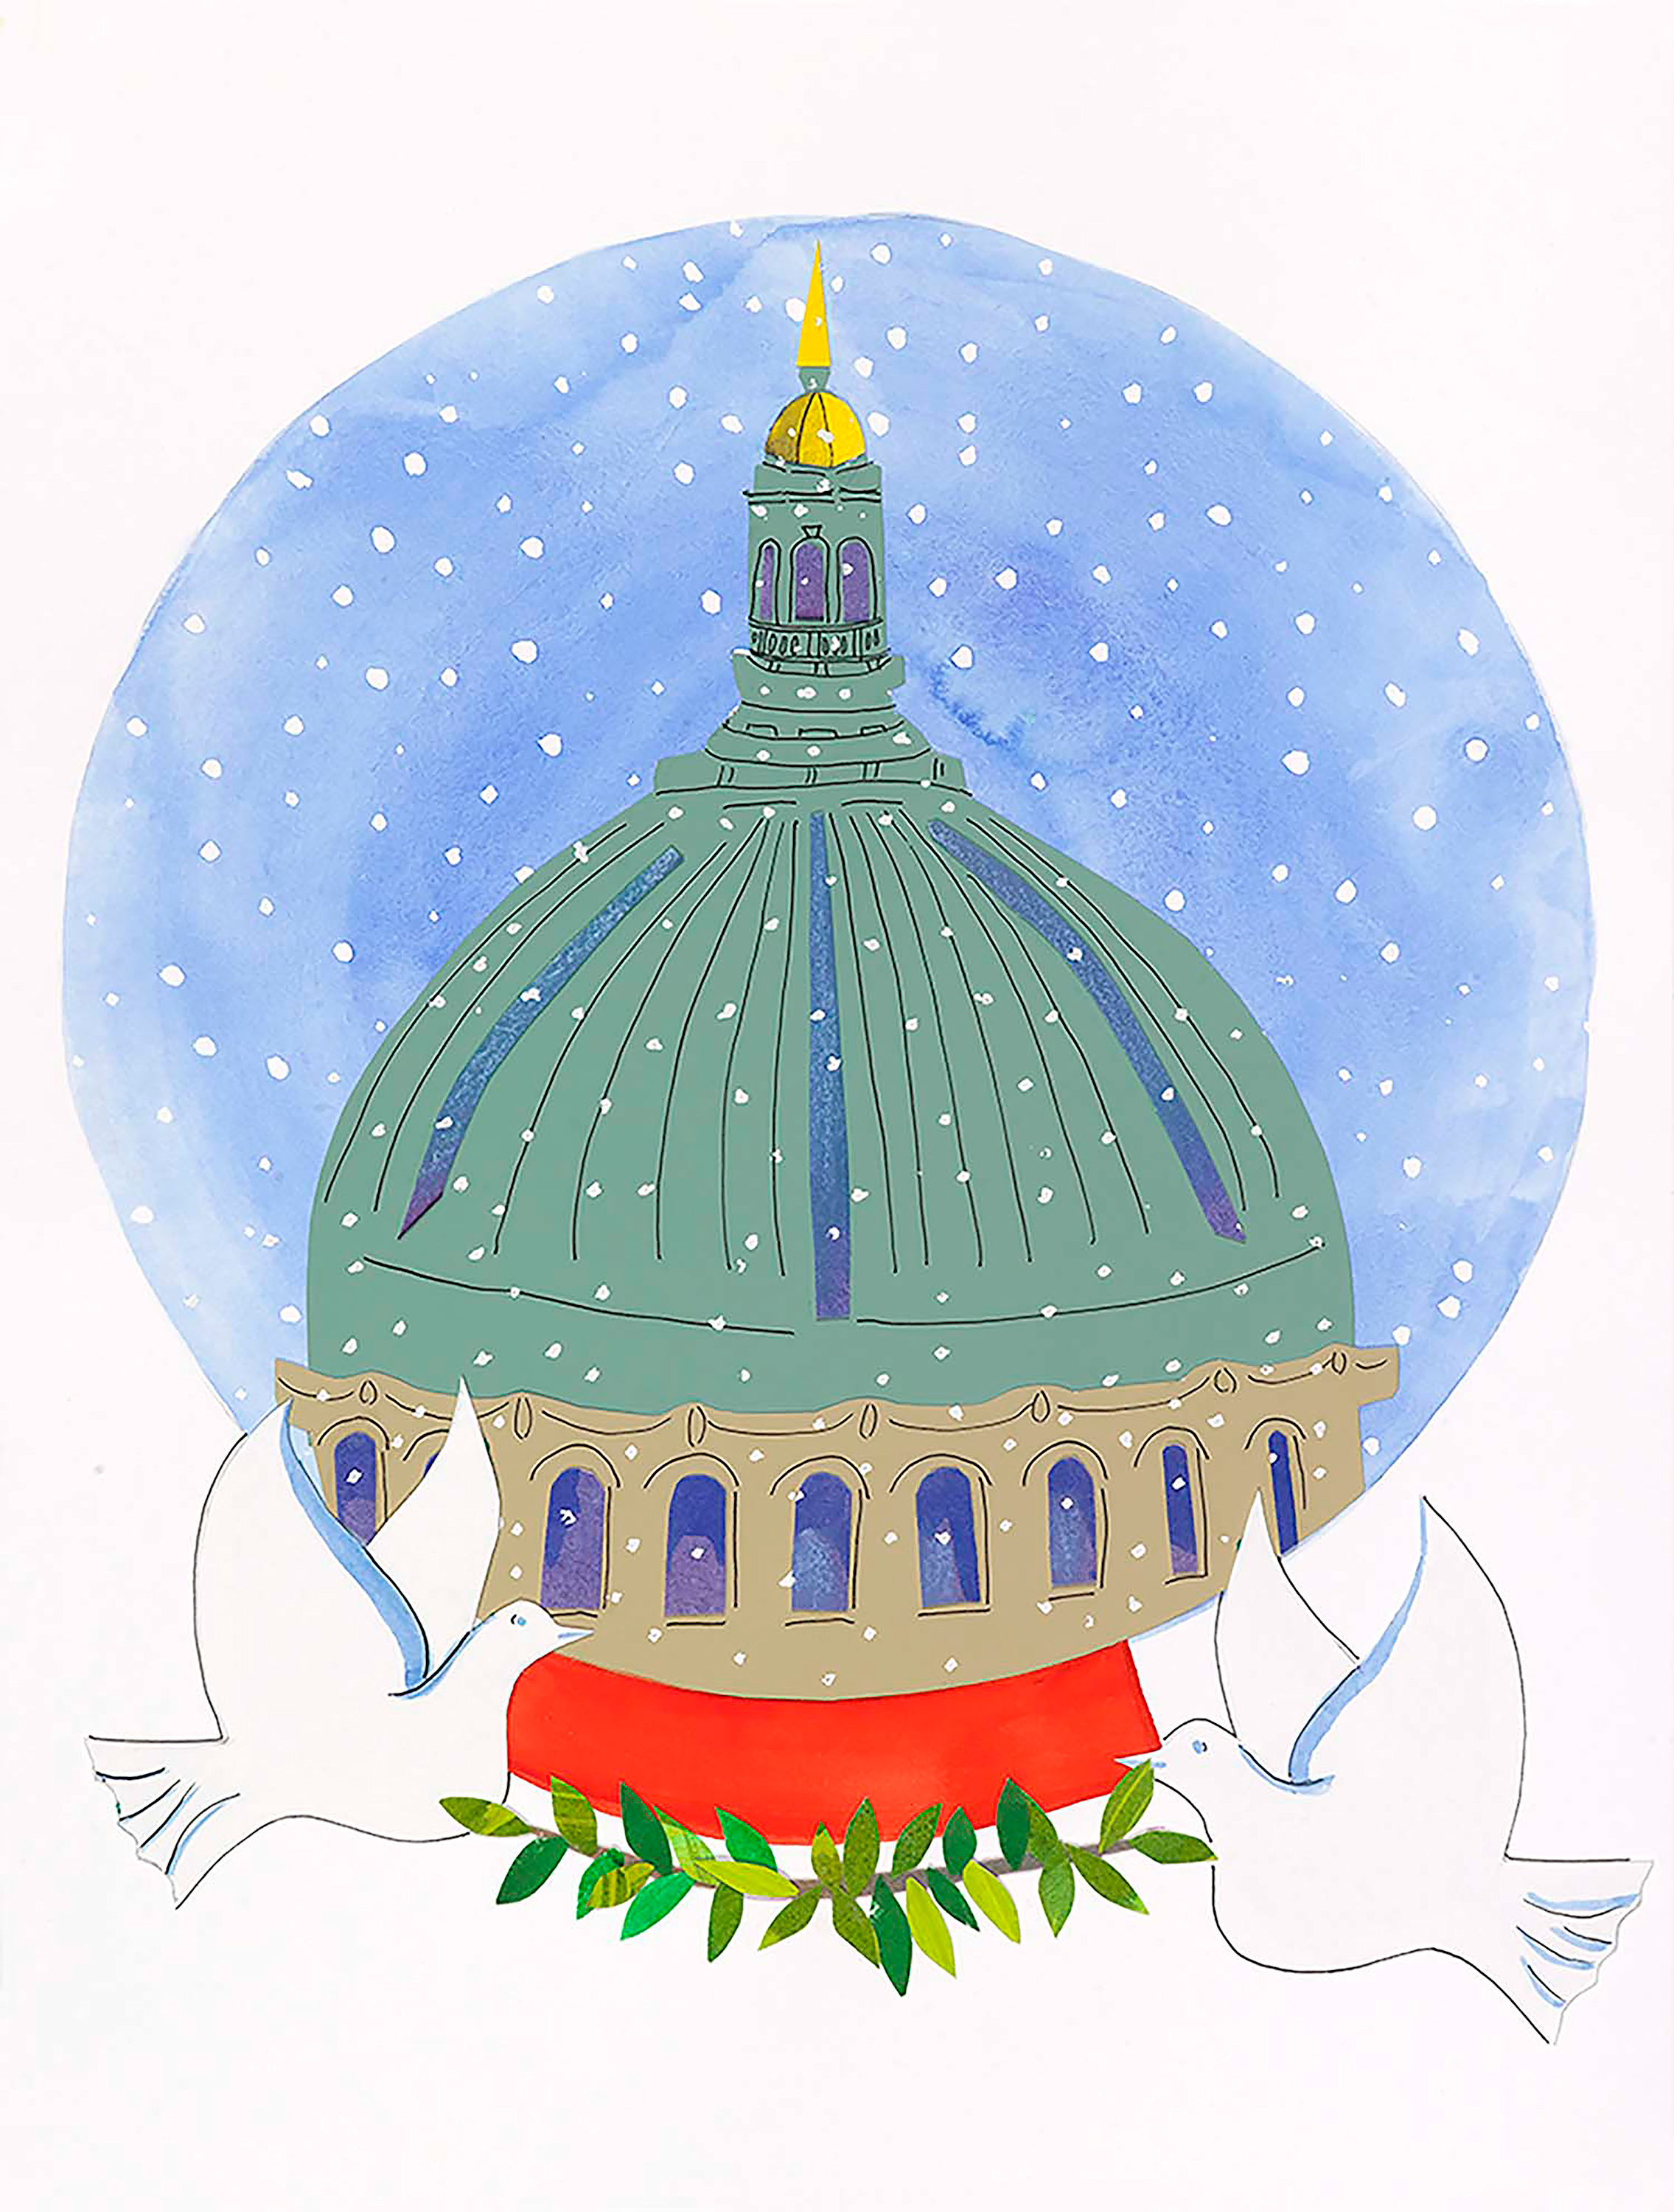 Usna chapel dome in snow globe9 ot7wyo